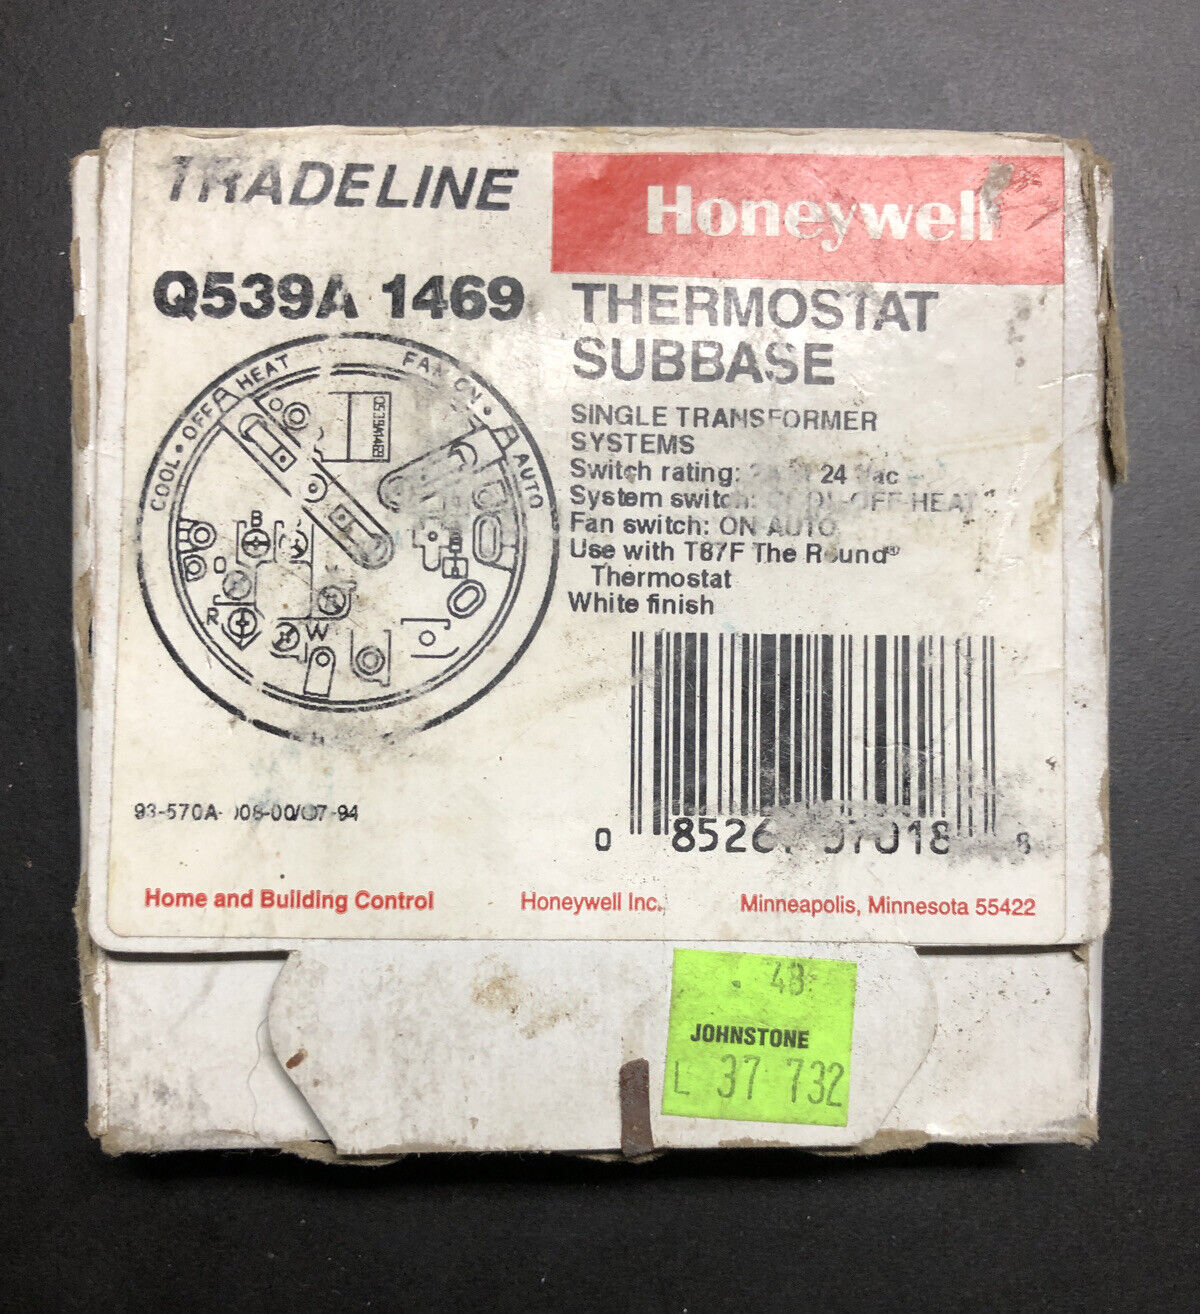 Honeywell Q539A1147 Thermostat Subbase - White Finish